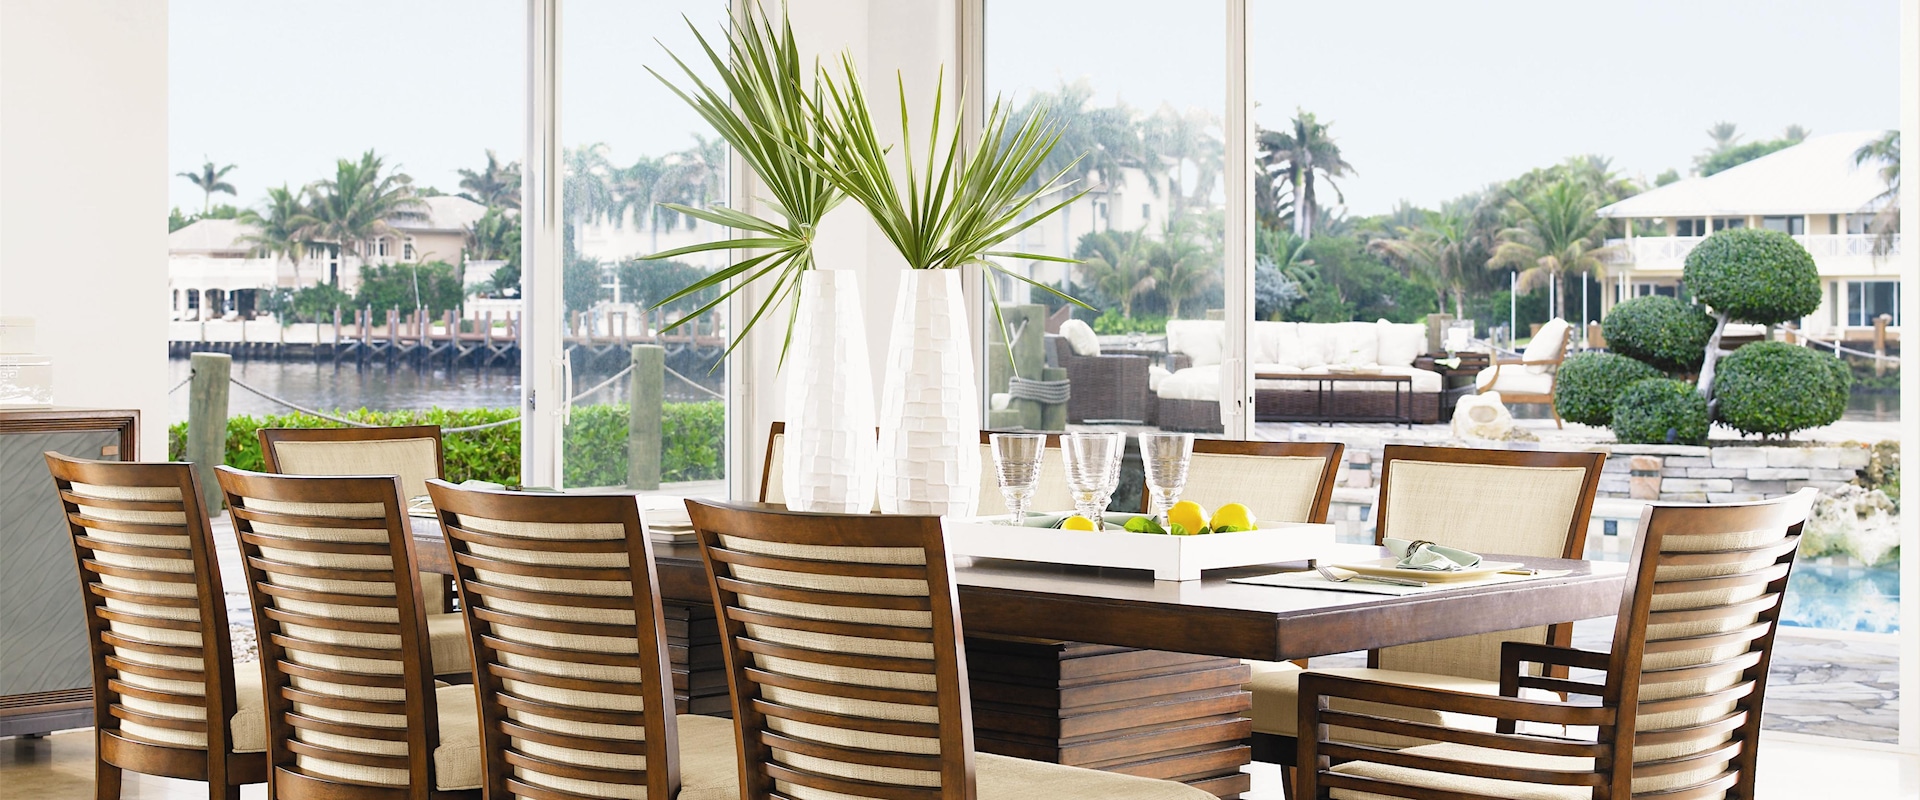 11 Piece Peninsula Dining Table & Kowloon Quickship Chair Set